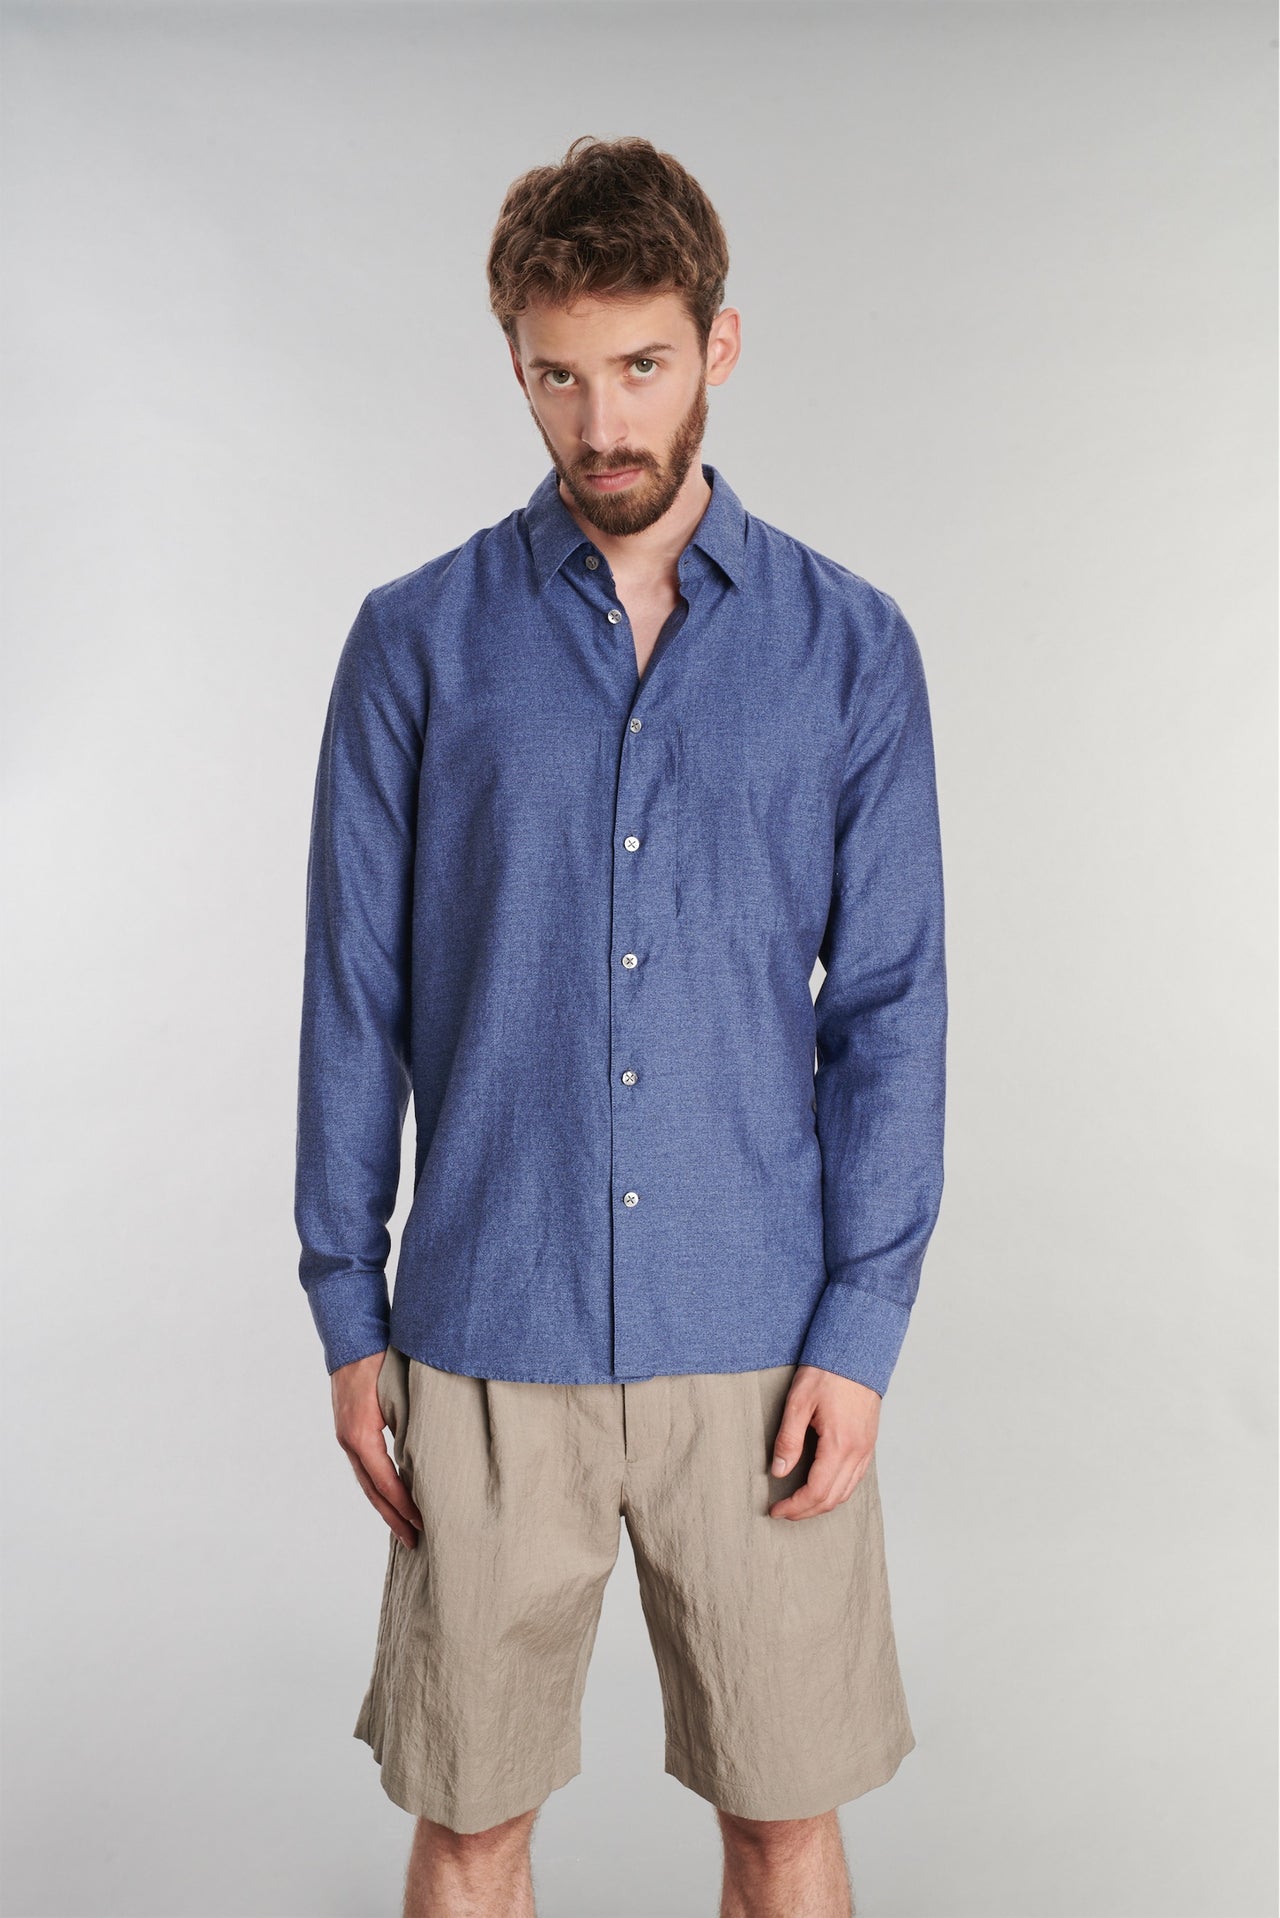 Feel Good Shirt in a Fine Navy Blue Italian Cotton